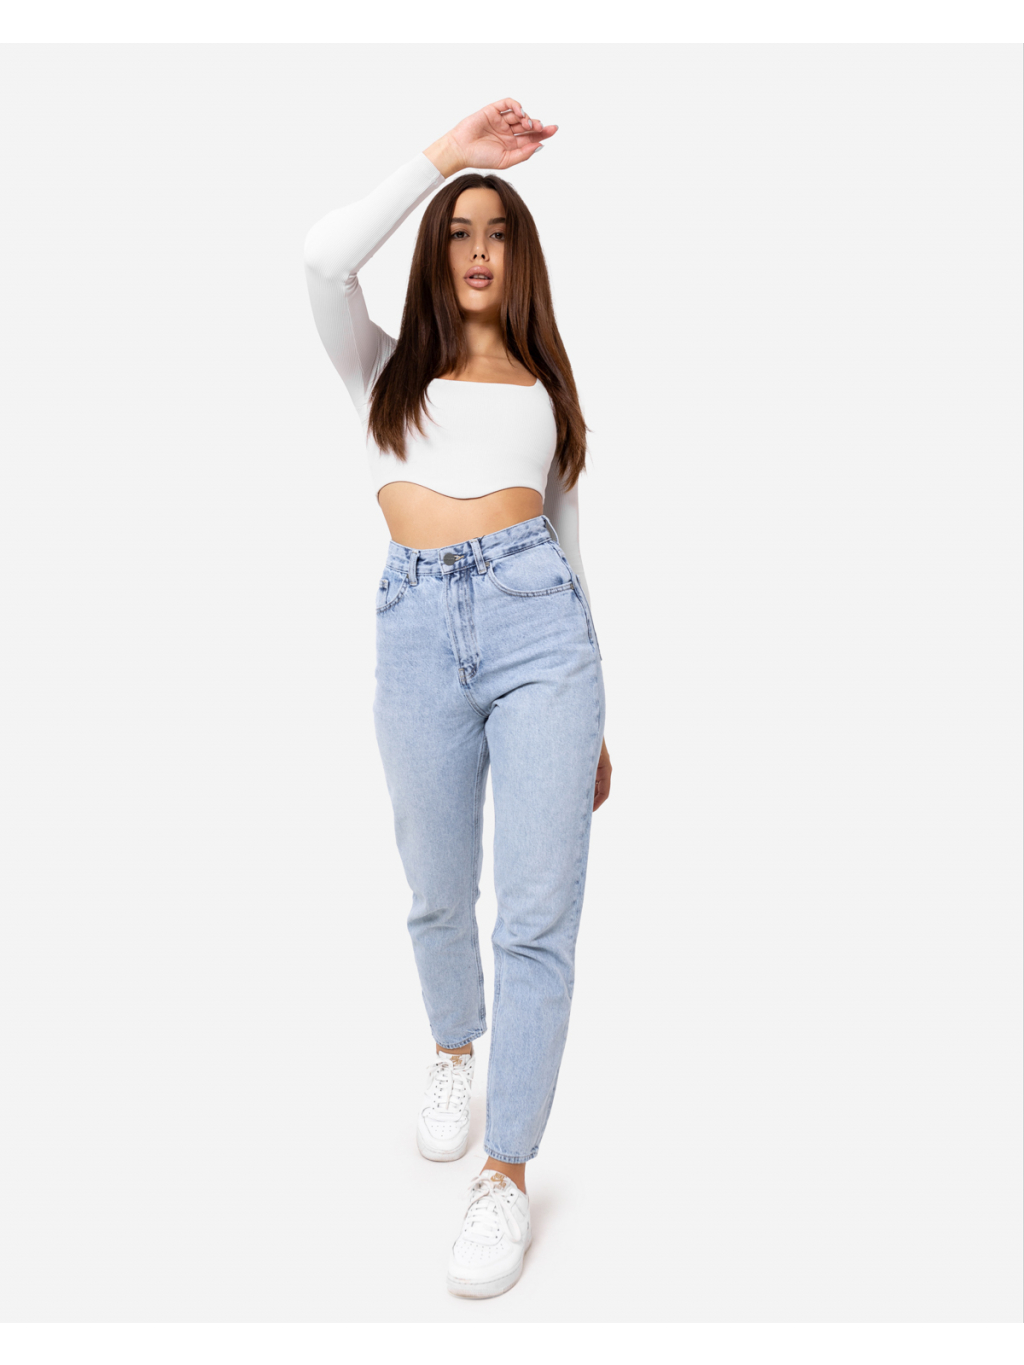 https://cdn.myshoptet.com/usr/www.donlemme.com/user/shop/big/2787-7_women-jeans-authentic--size-38--m.jpg?64a14eec